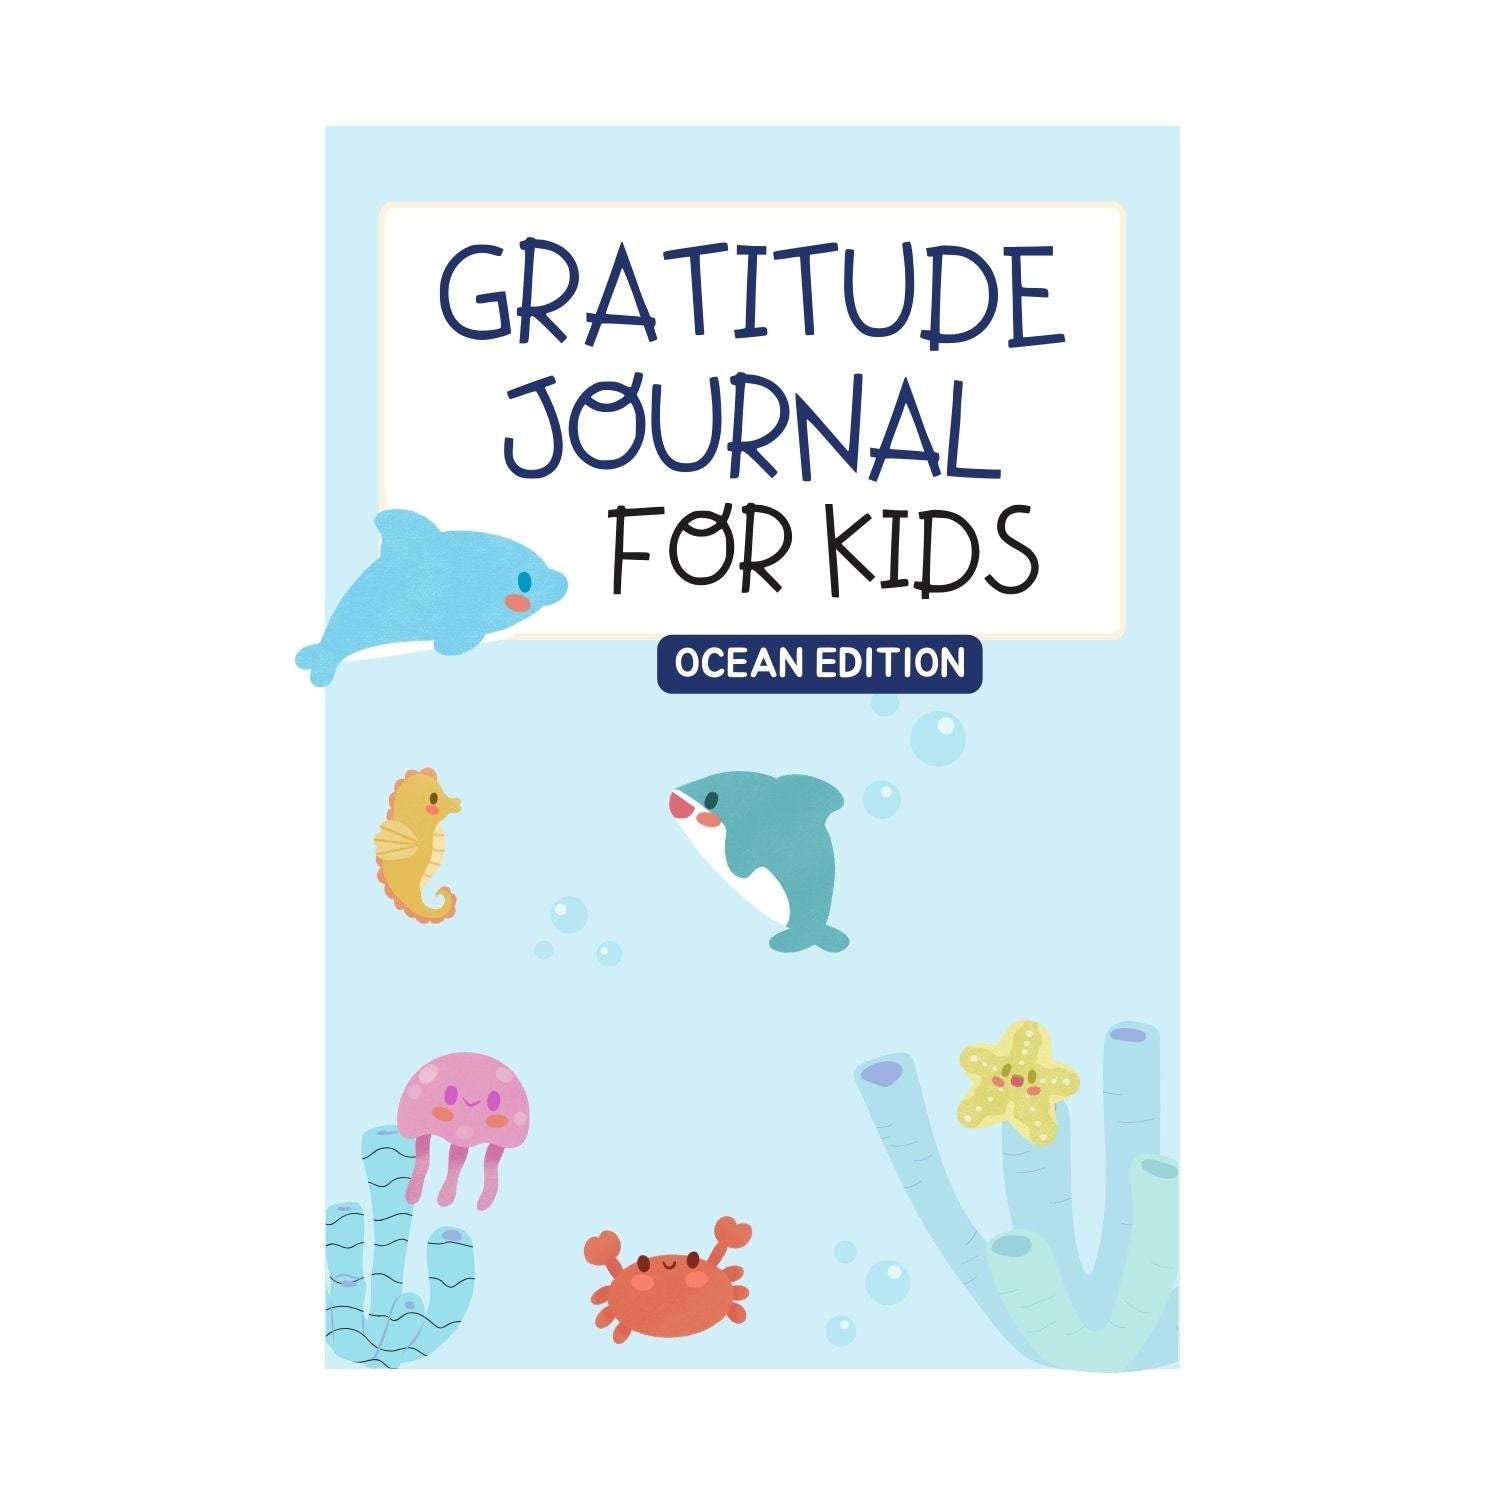 Kids Gratitude Journal - Ocean Edition | Mindful Activity for Children